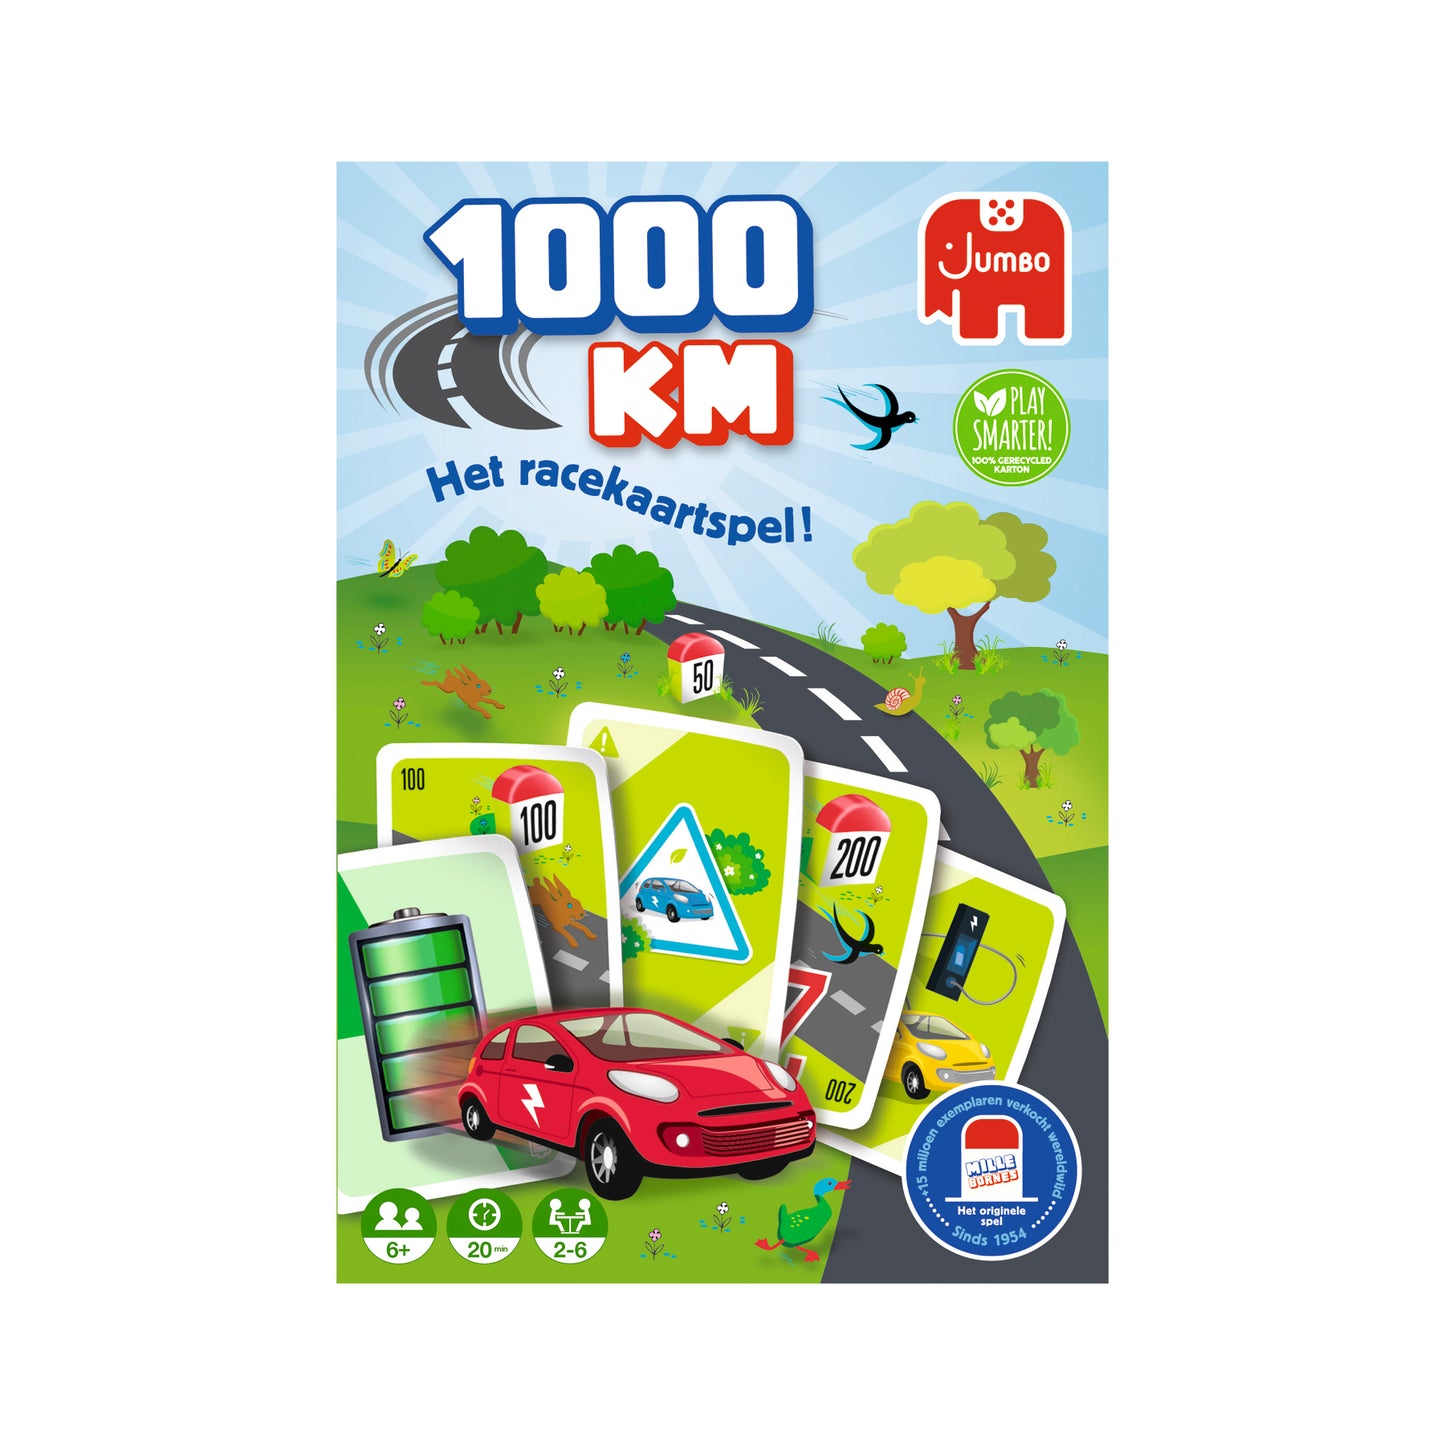 1000KM kaartspel - product image - Jumboplay.com